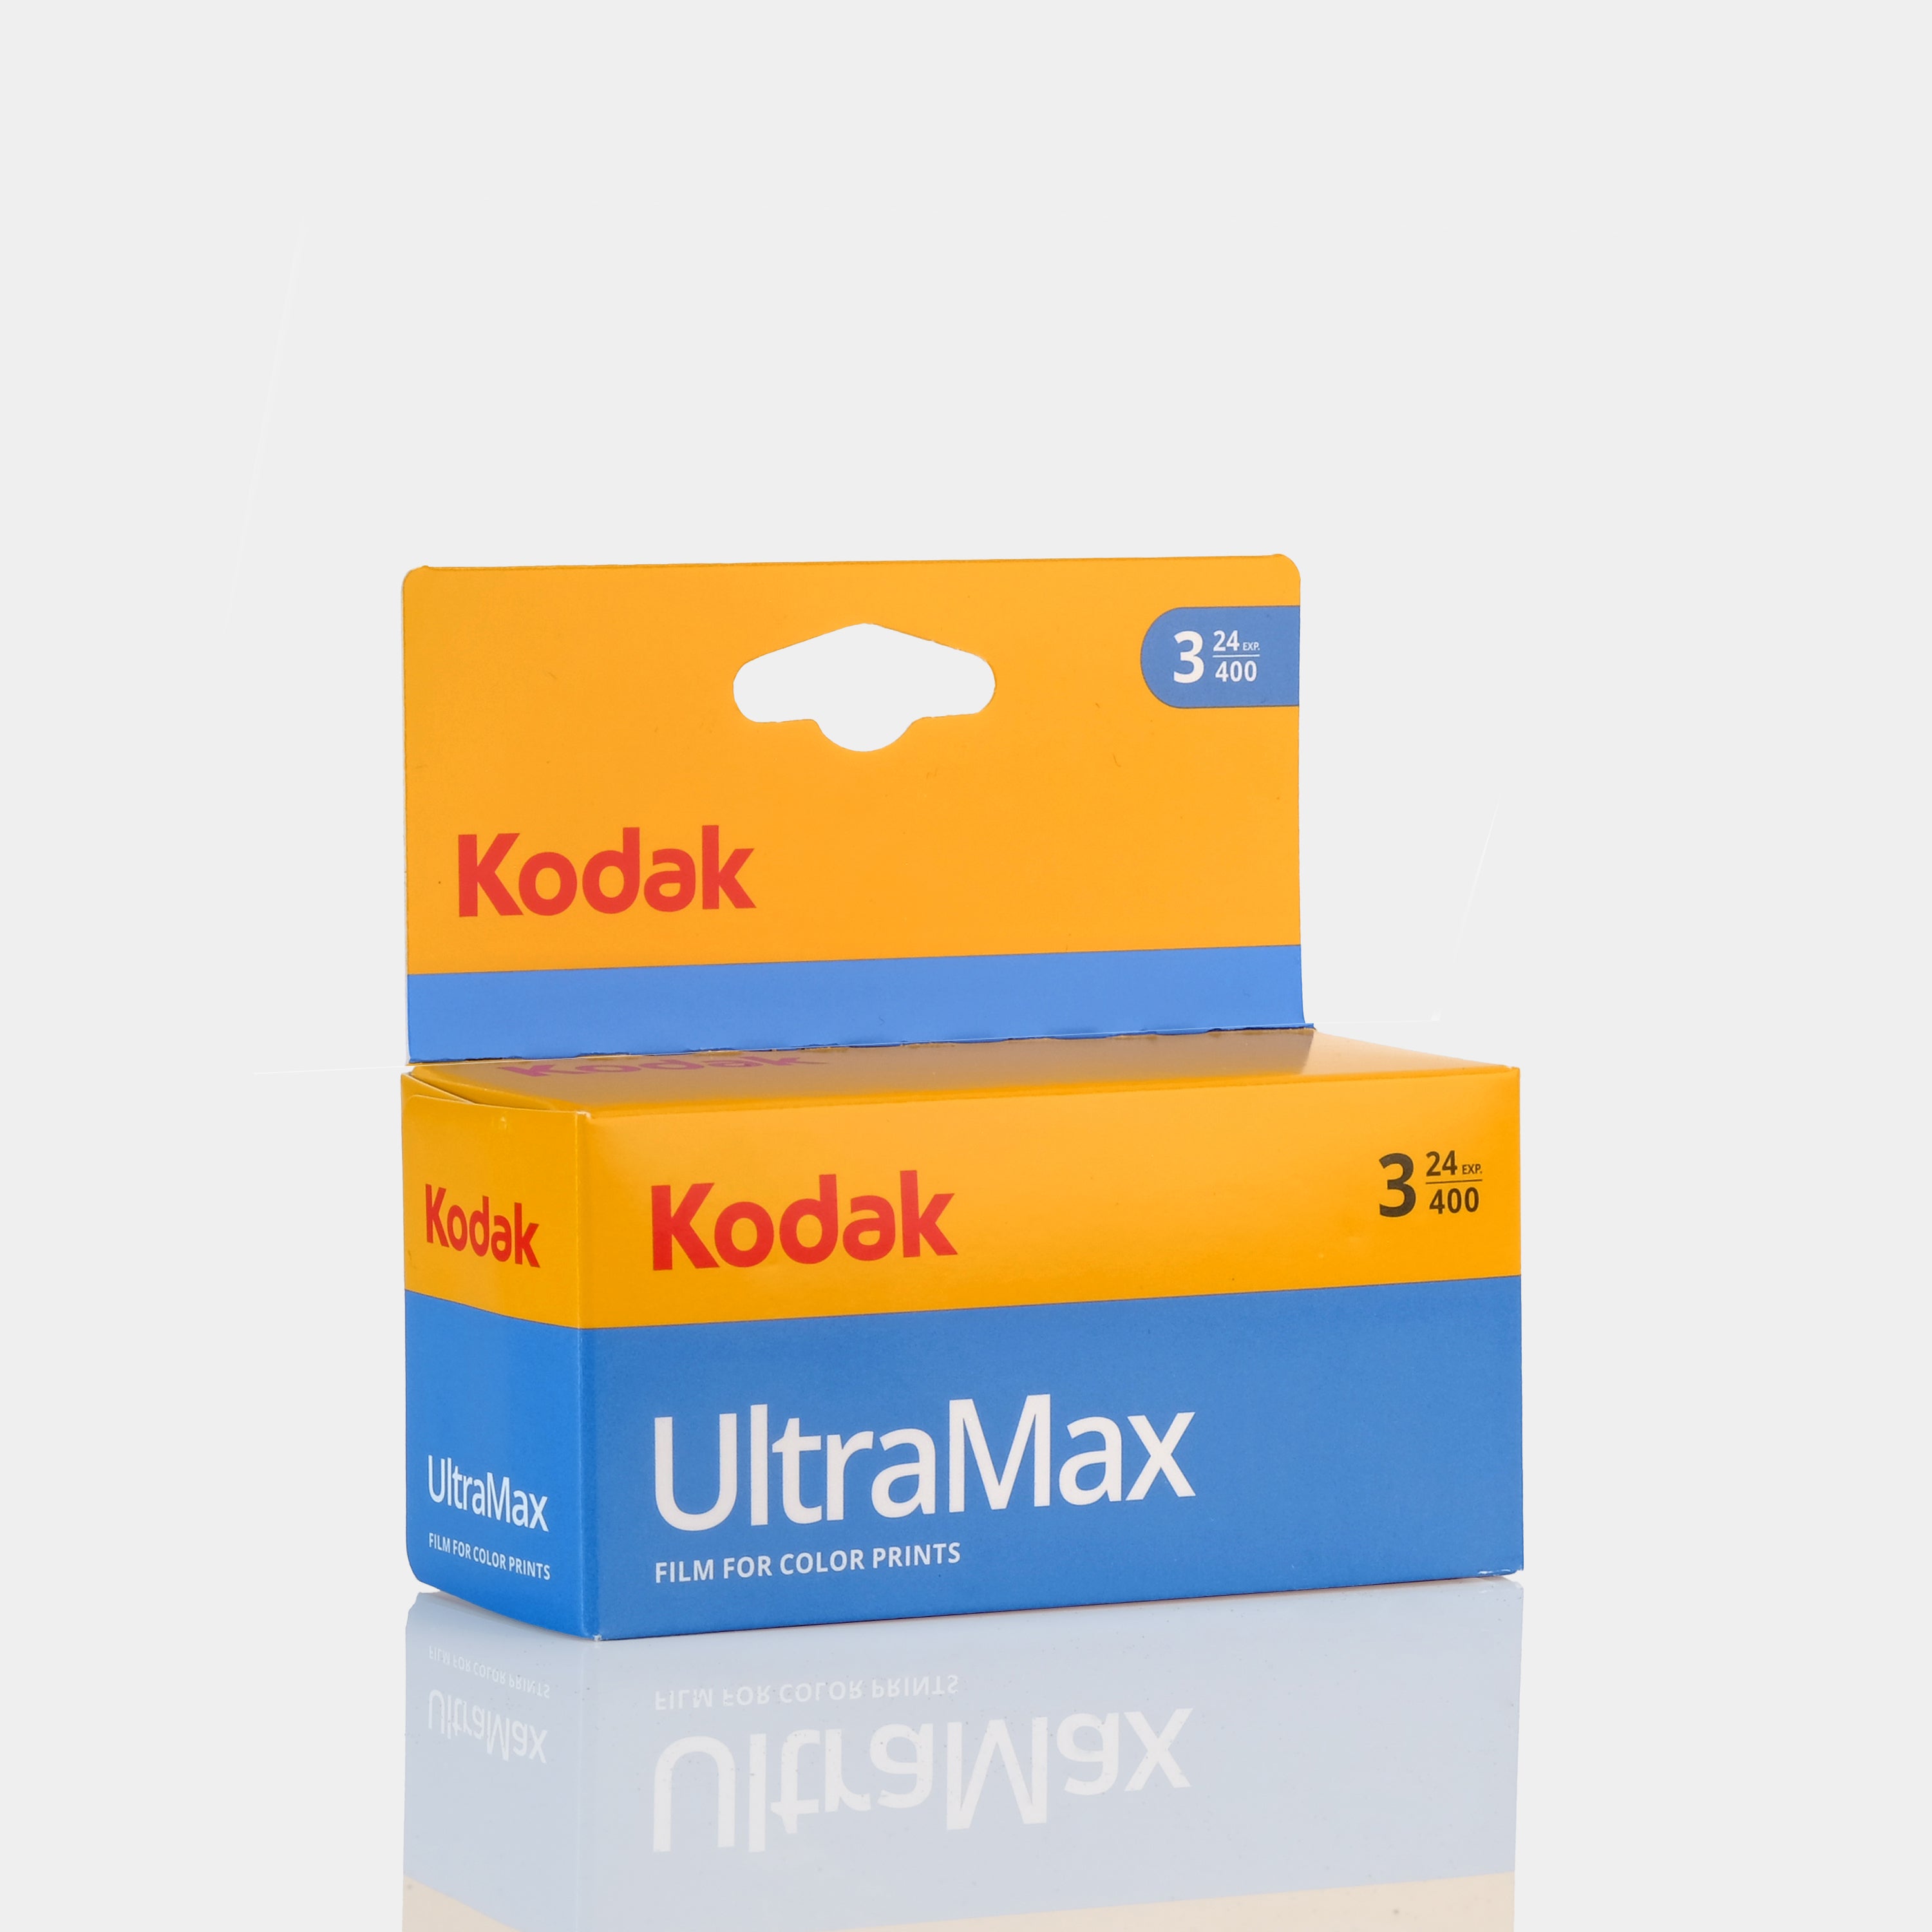 RETO Ultra Wide & Slim Charcoal 35mm Film Camera With 3-Pack Kodak UltraMax Film